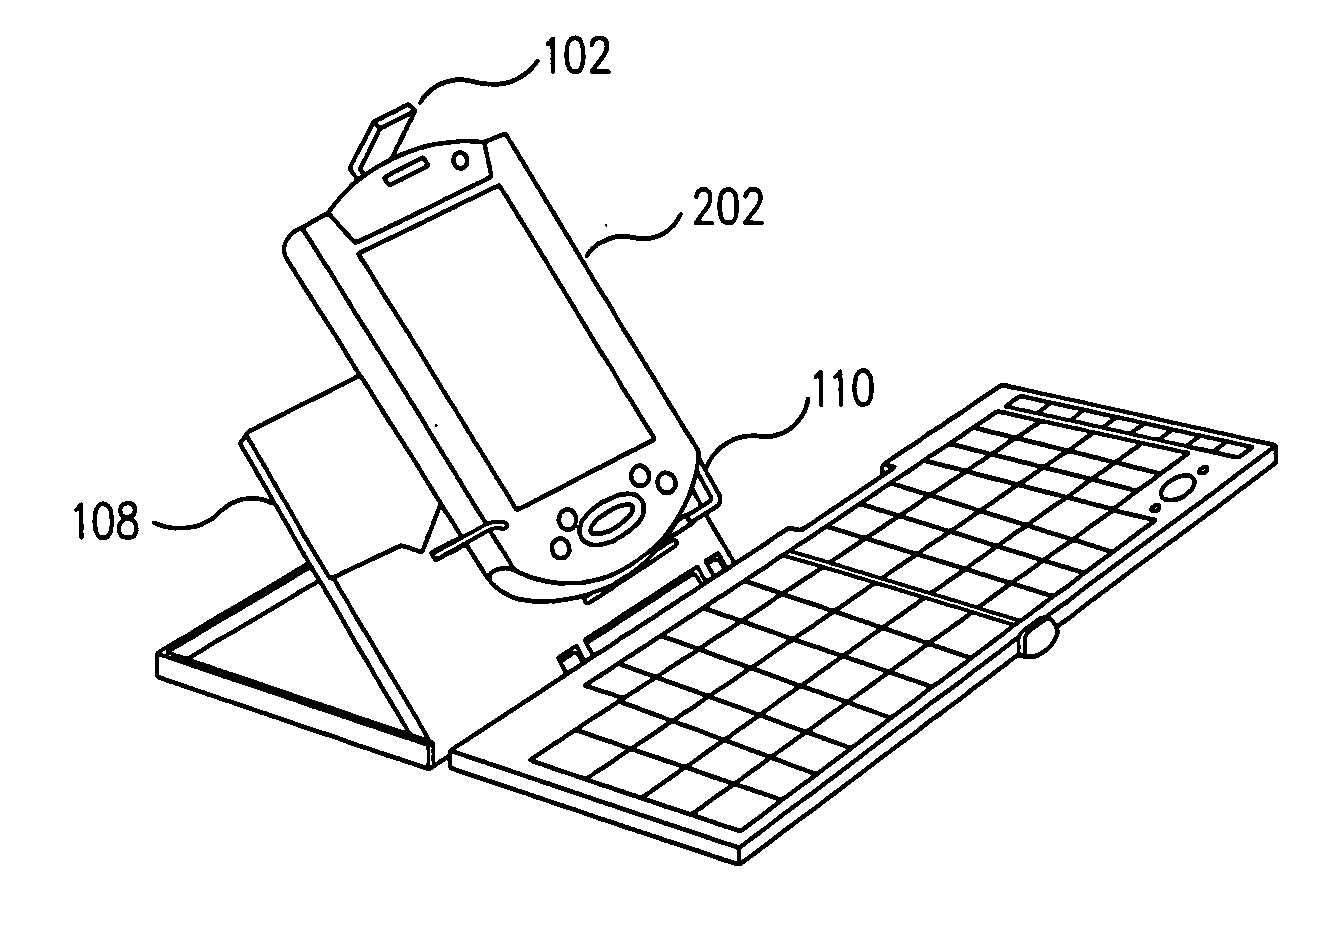 Universal mobile keyboard